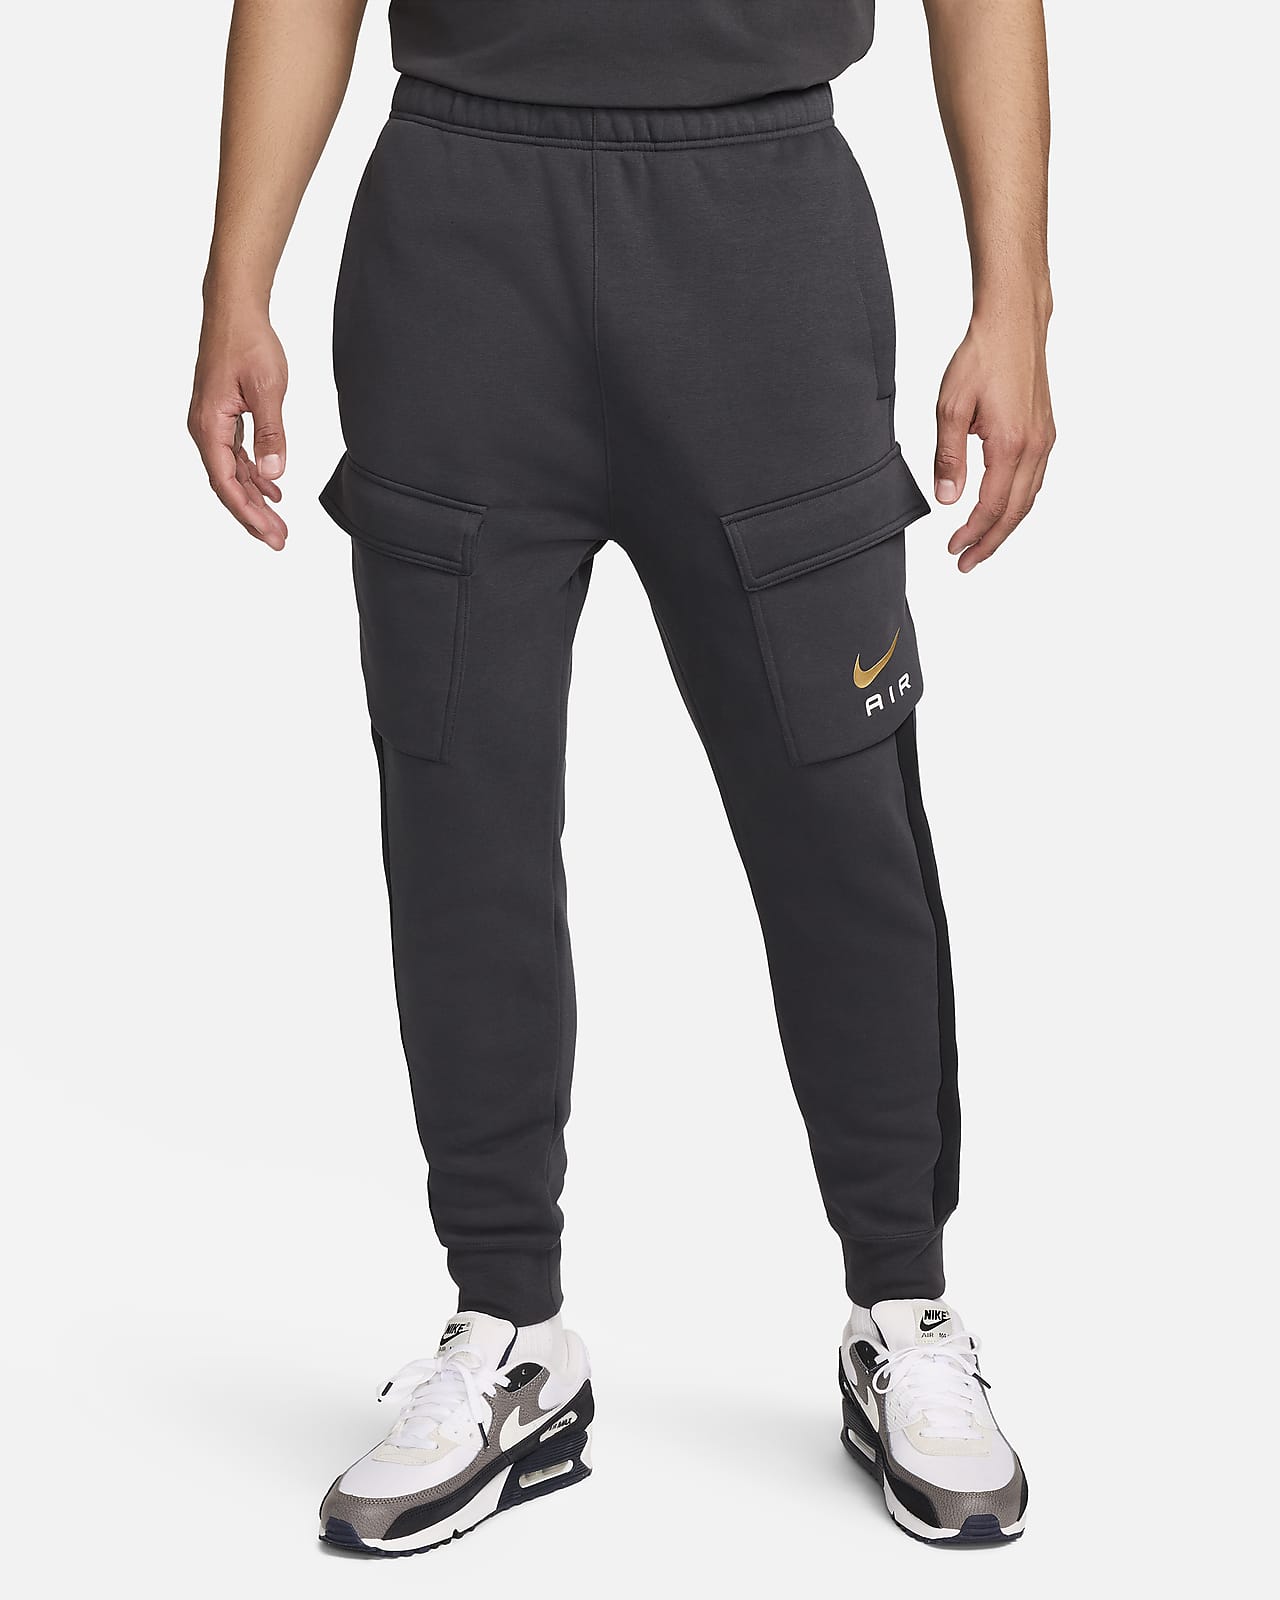 Nike Air Men's Fleece Cargo Trousers